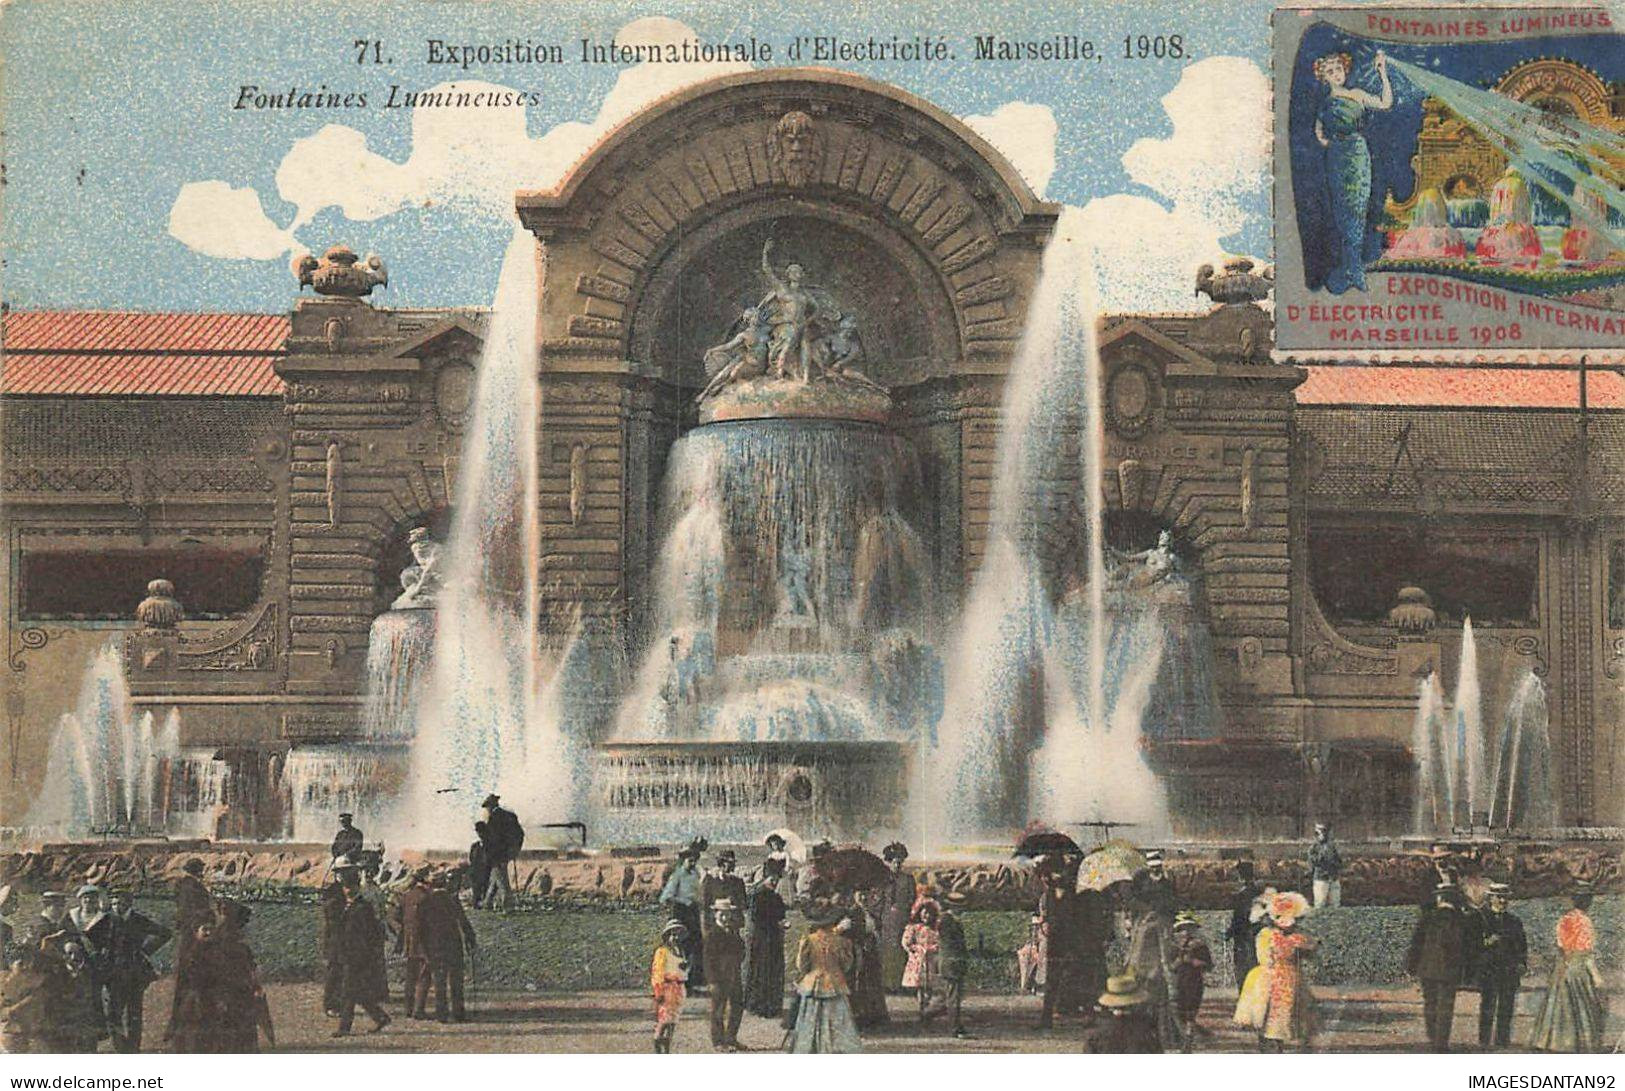 13 MARSEILLE #MK52097 EXPOSITION INTERNATIONALE D ELECTRICITE FONTAINES LUMINEUSES 1908 CACHET + VIGNETTE - Weltausstellung Elektrizität 1908 U.a.